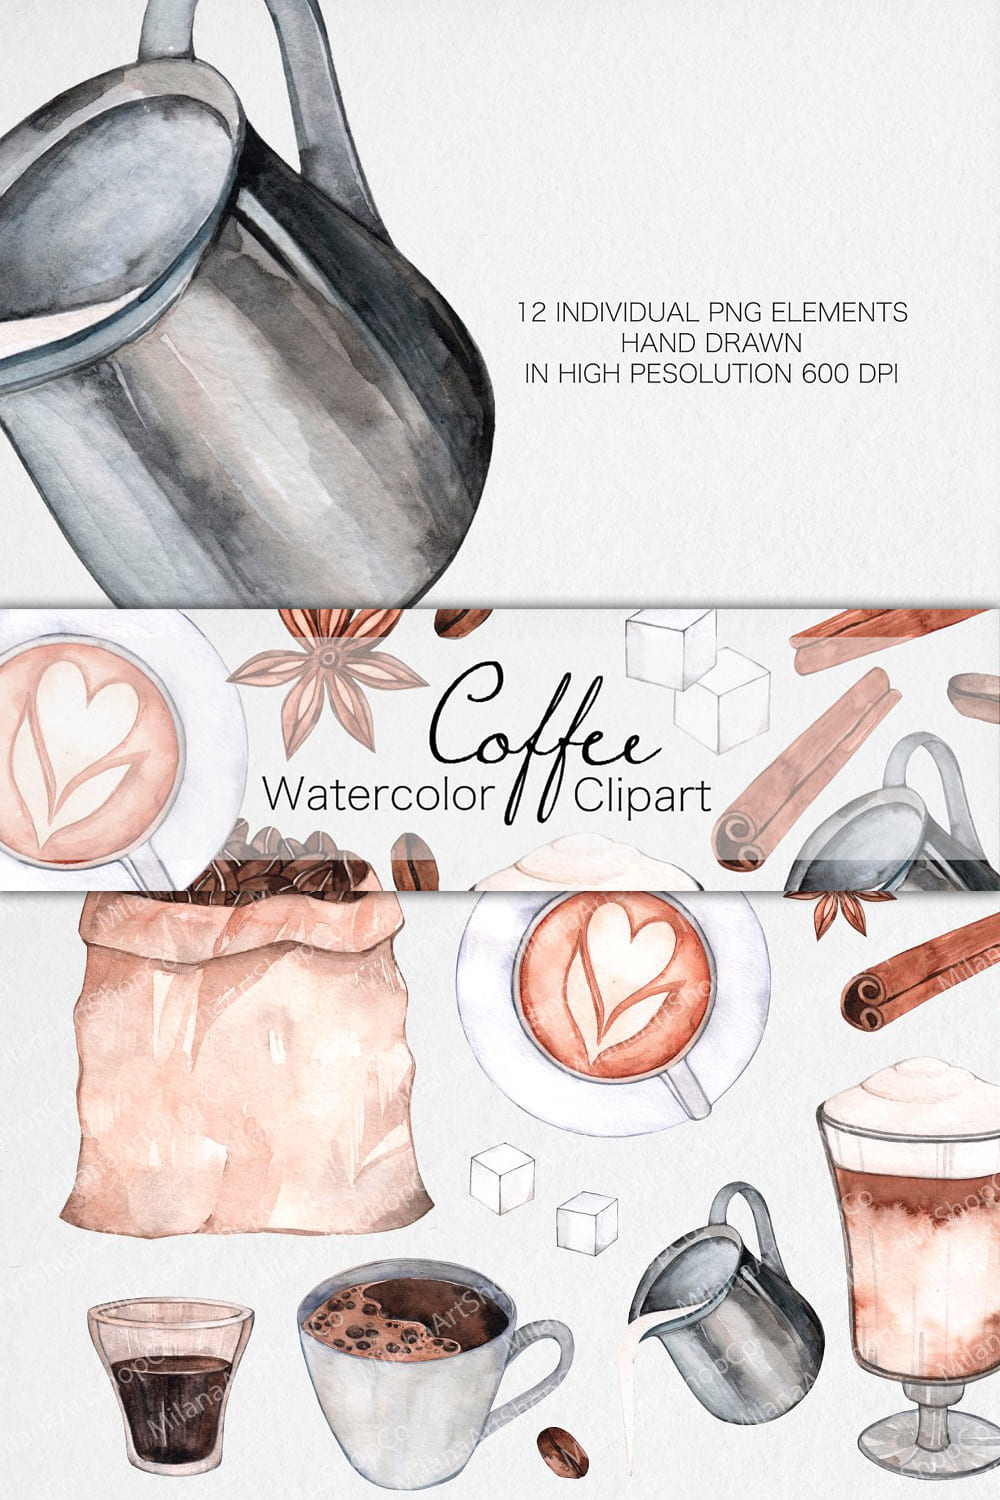 Watercolor Coffee Clipart facebook image.